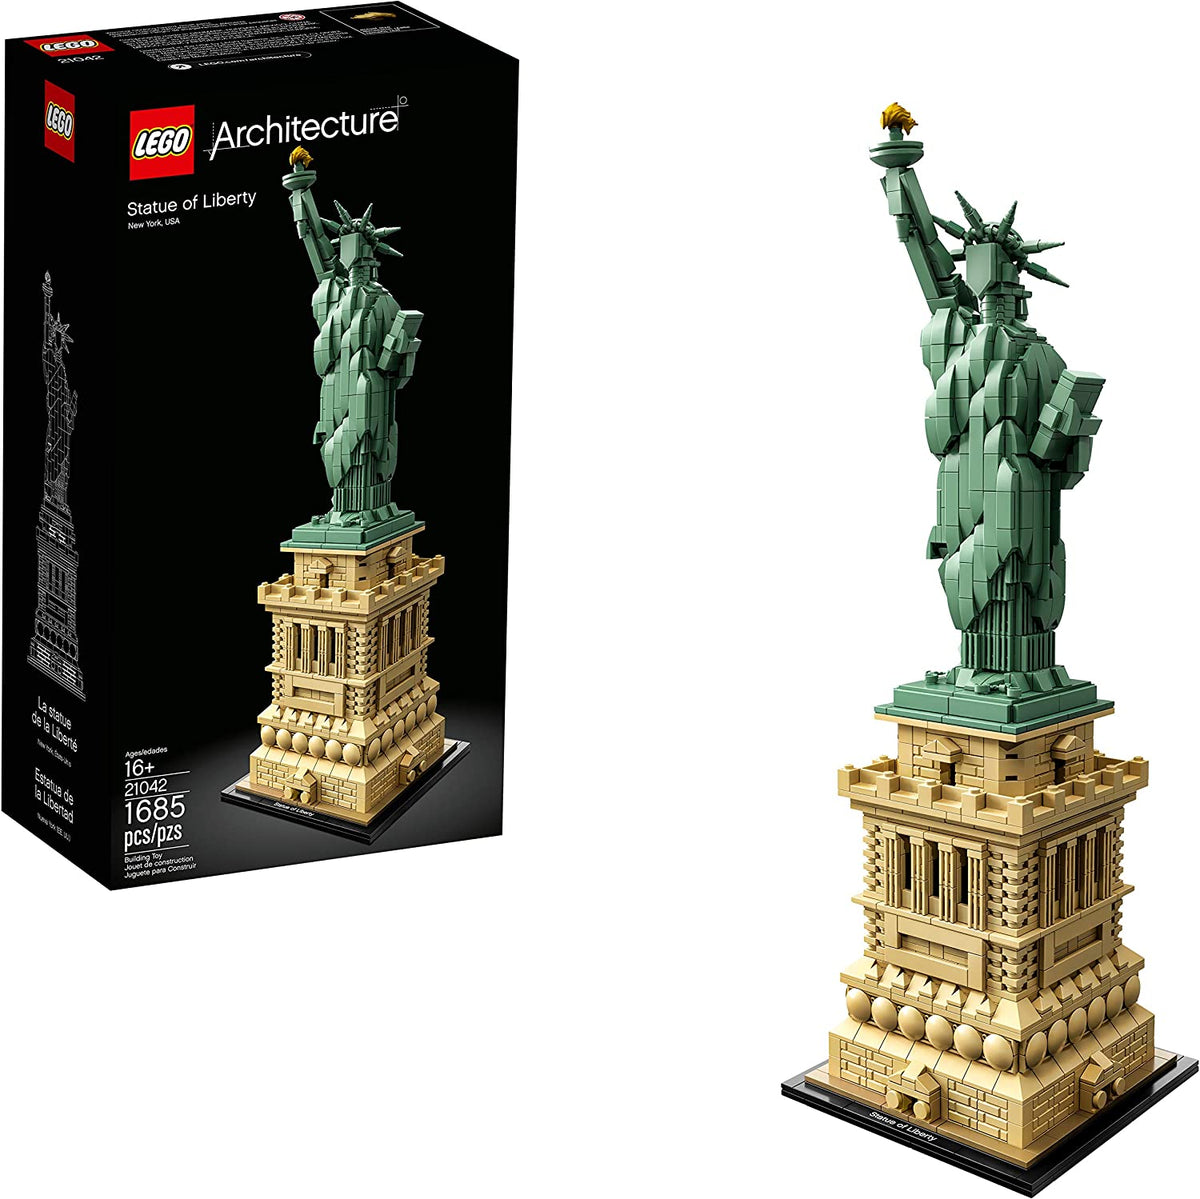 ARCHITECTURE 21042: Statue of Liberty